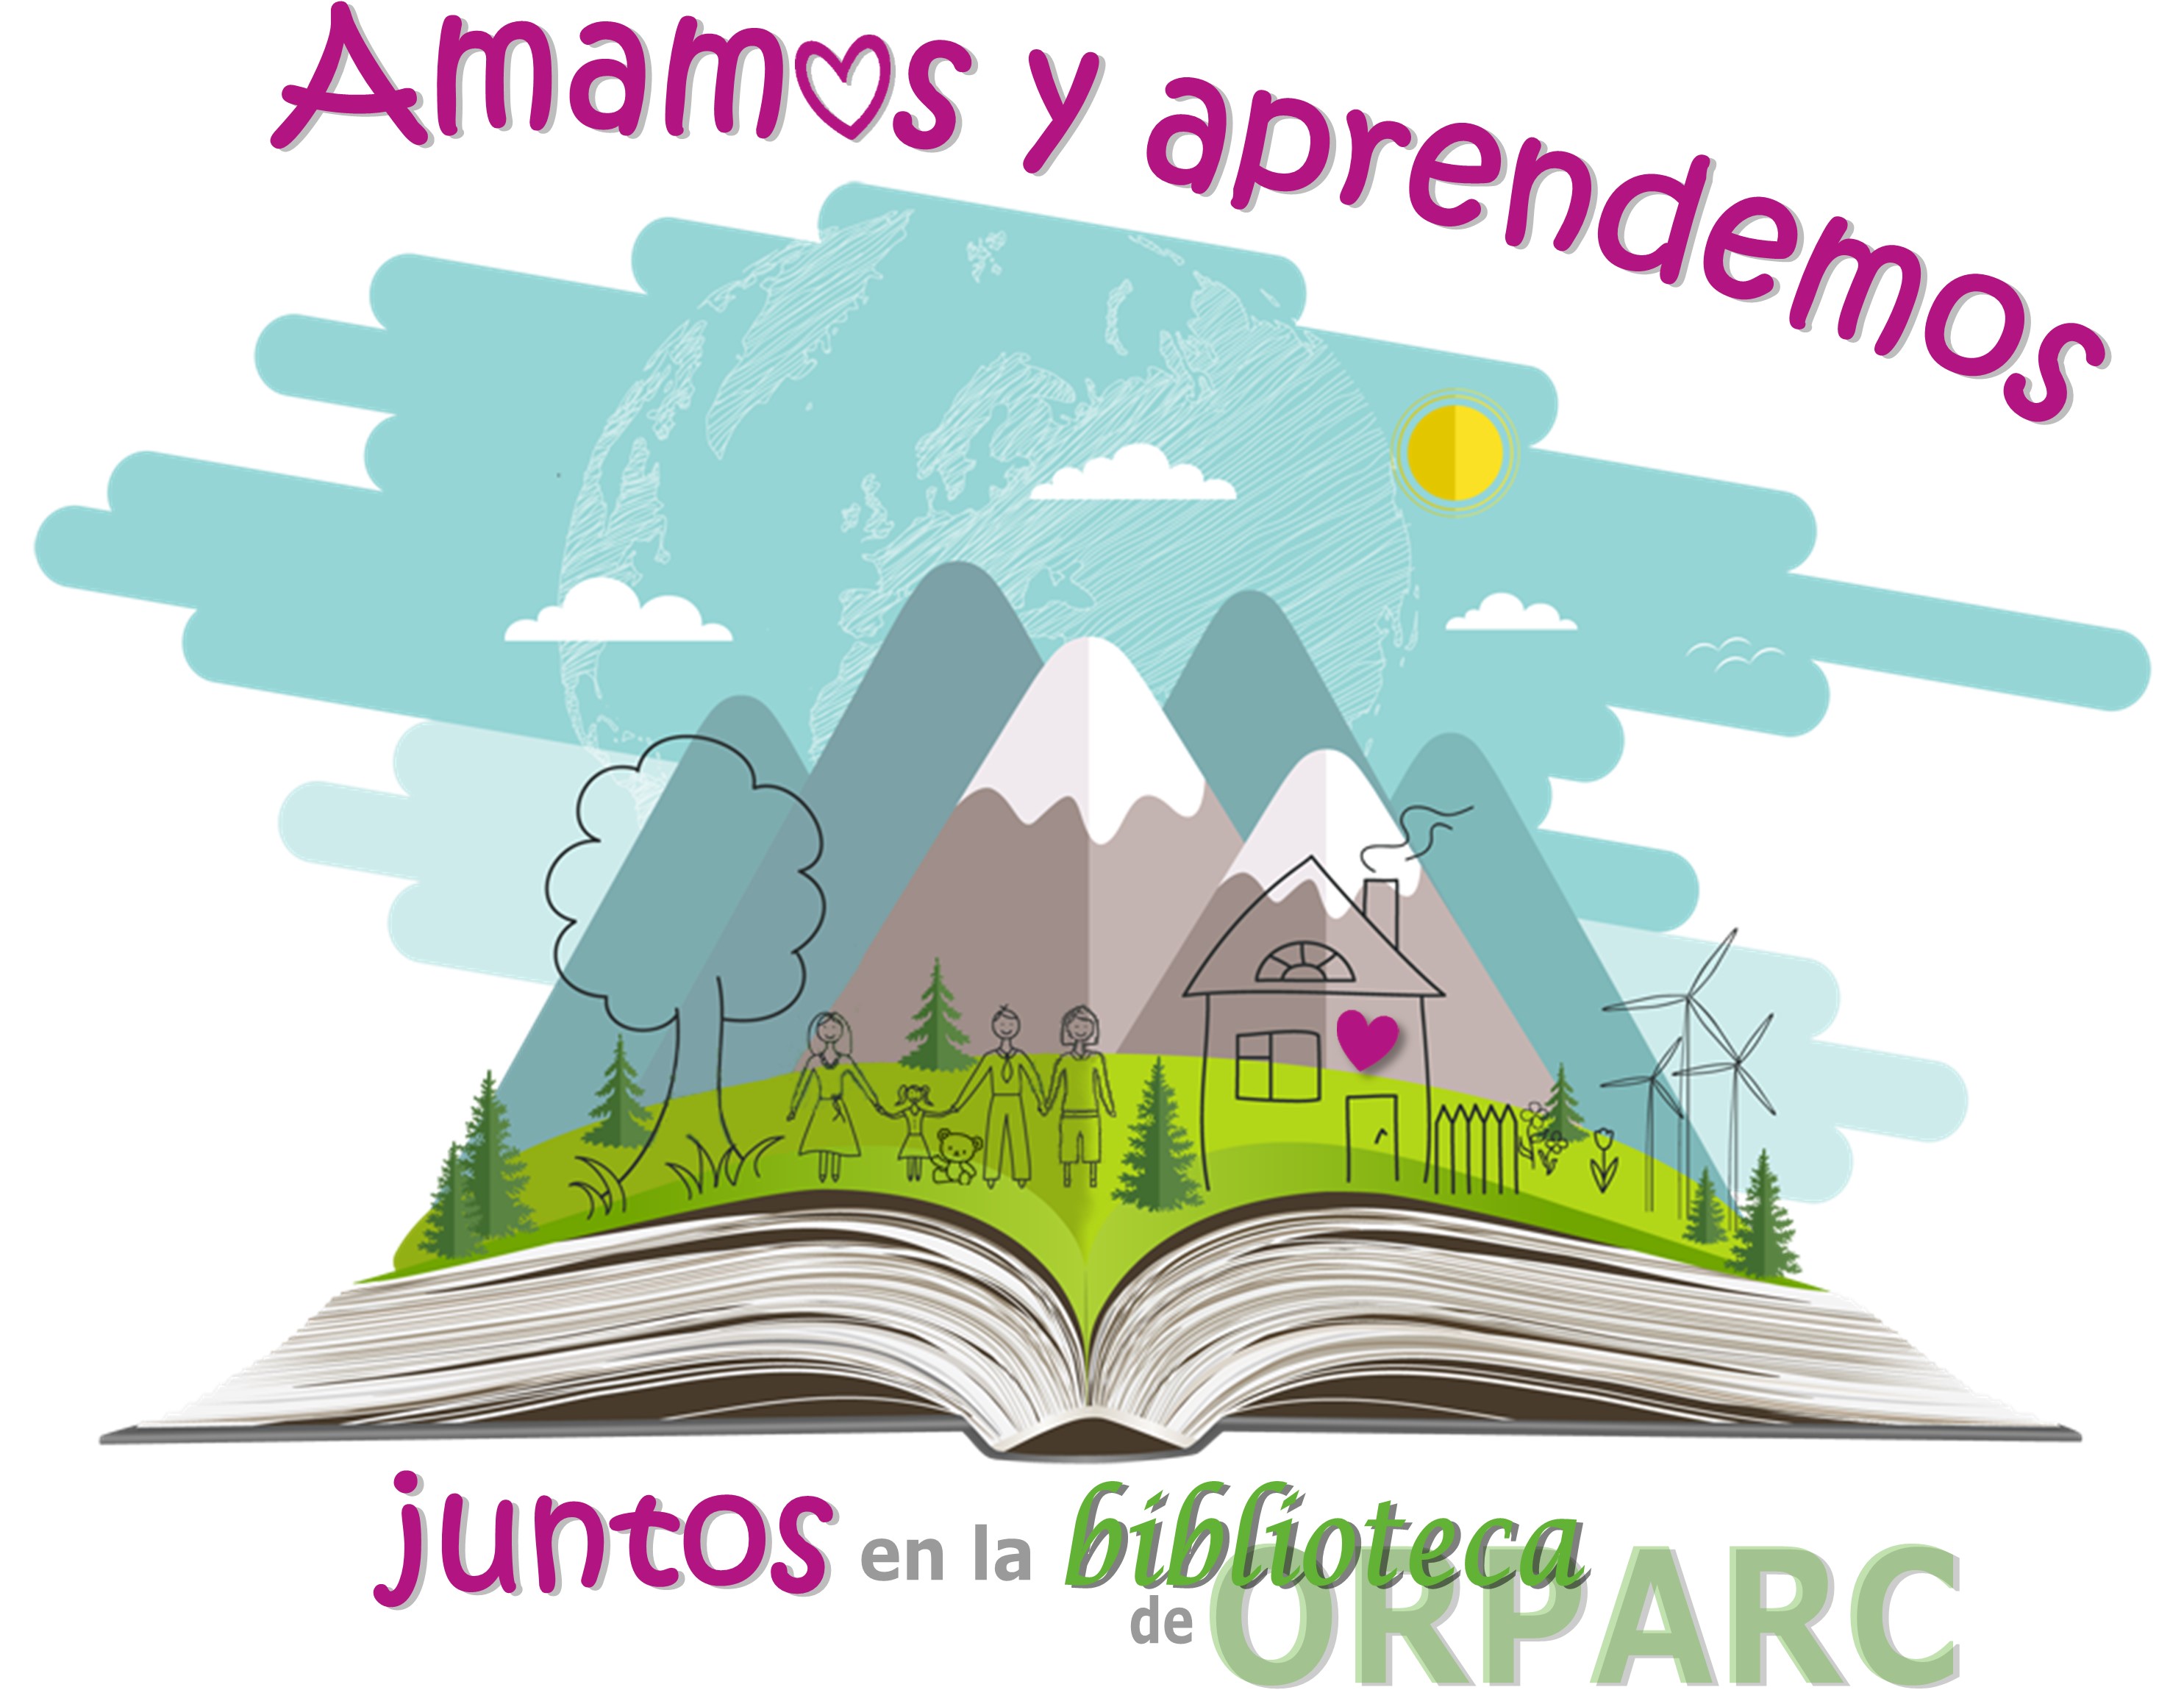 Orparc_Library_Spanish.jpg